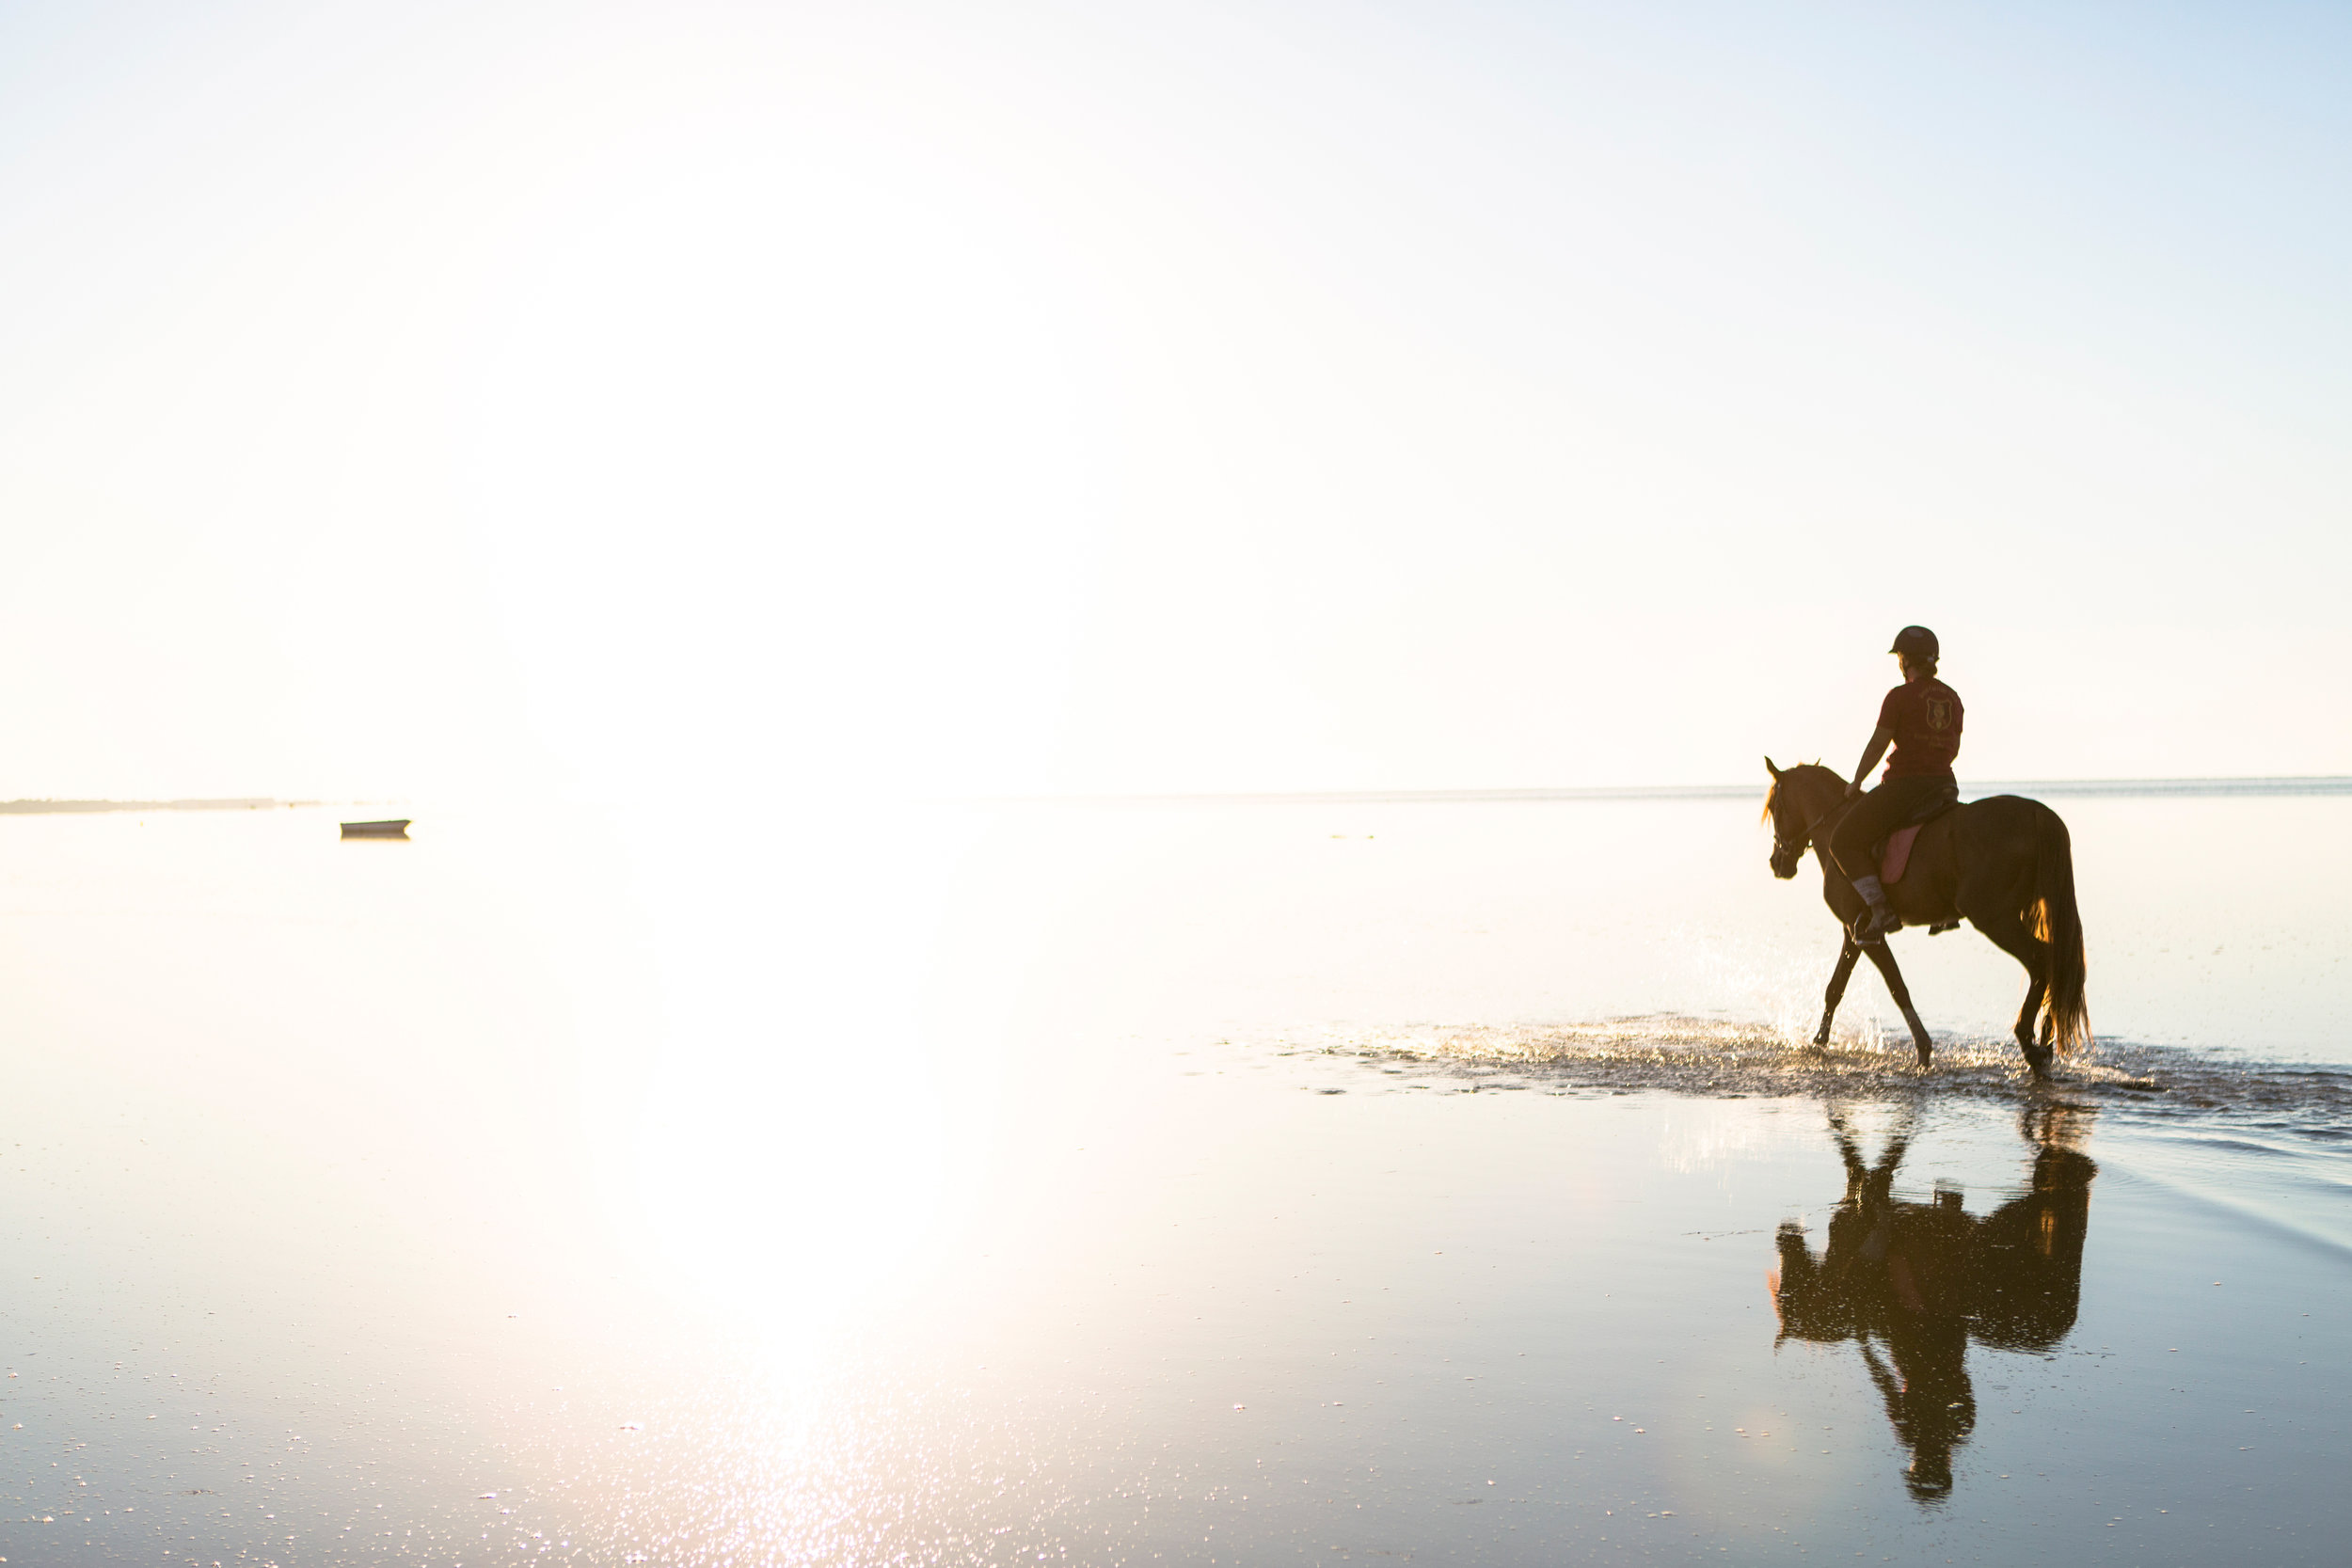 Woman on horseback in shallow water, Djerba, Tunisia.jpg